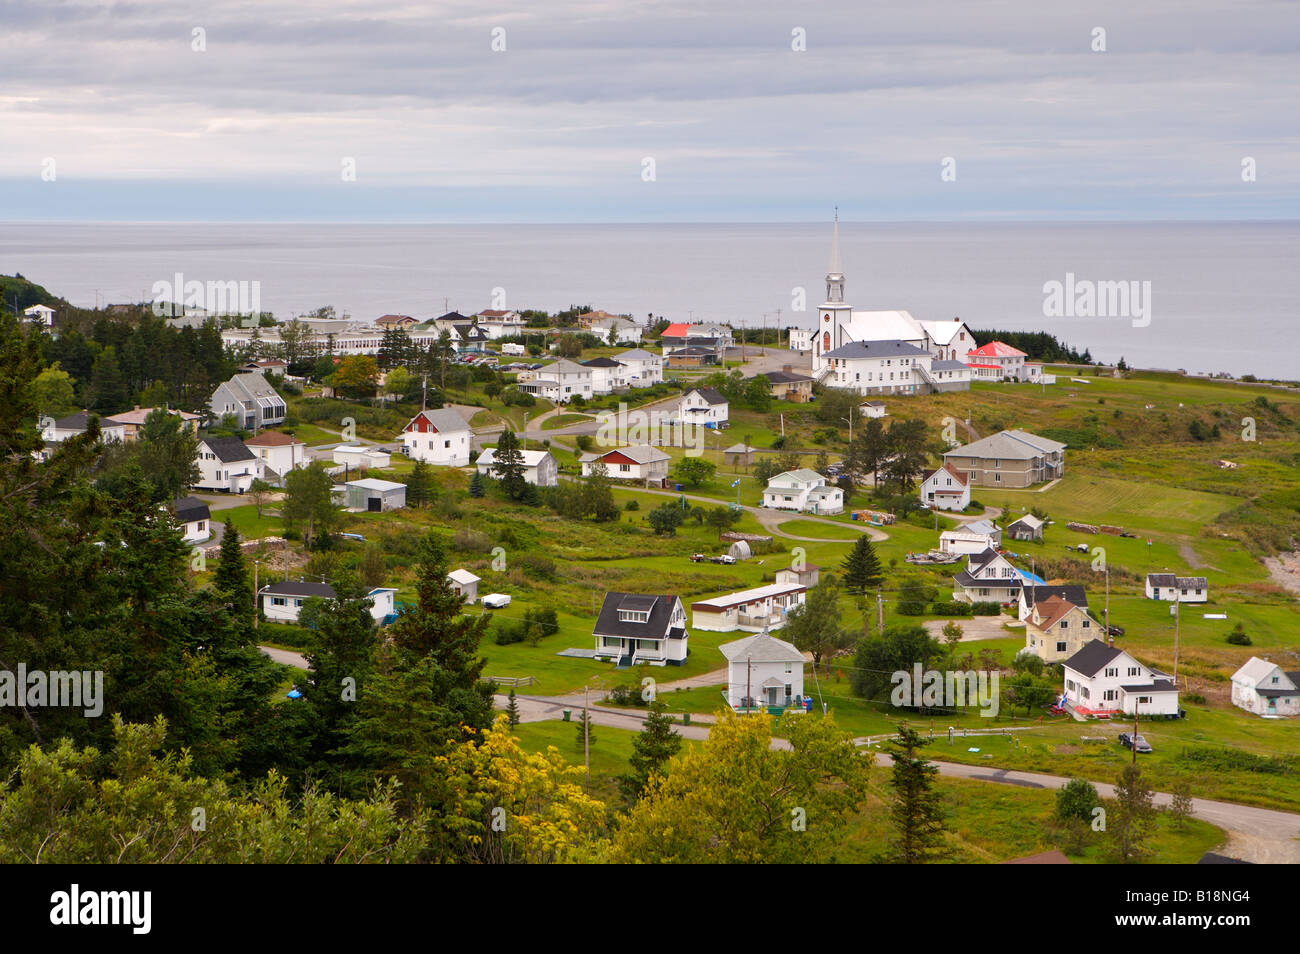 Village of Saint-Maurice-de-I'Echouerie, Land's End, Gaspesie, Gaspesie Peninsula, Highway 132, Gulf of St Lawrence, Quebec, Can Stock Photo